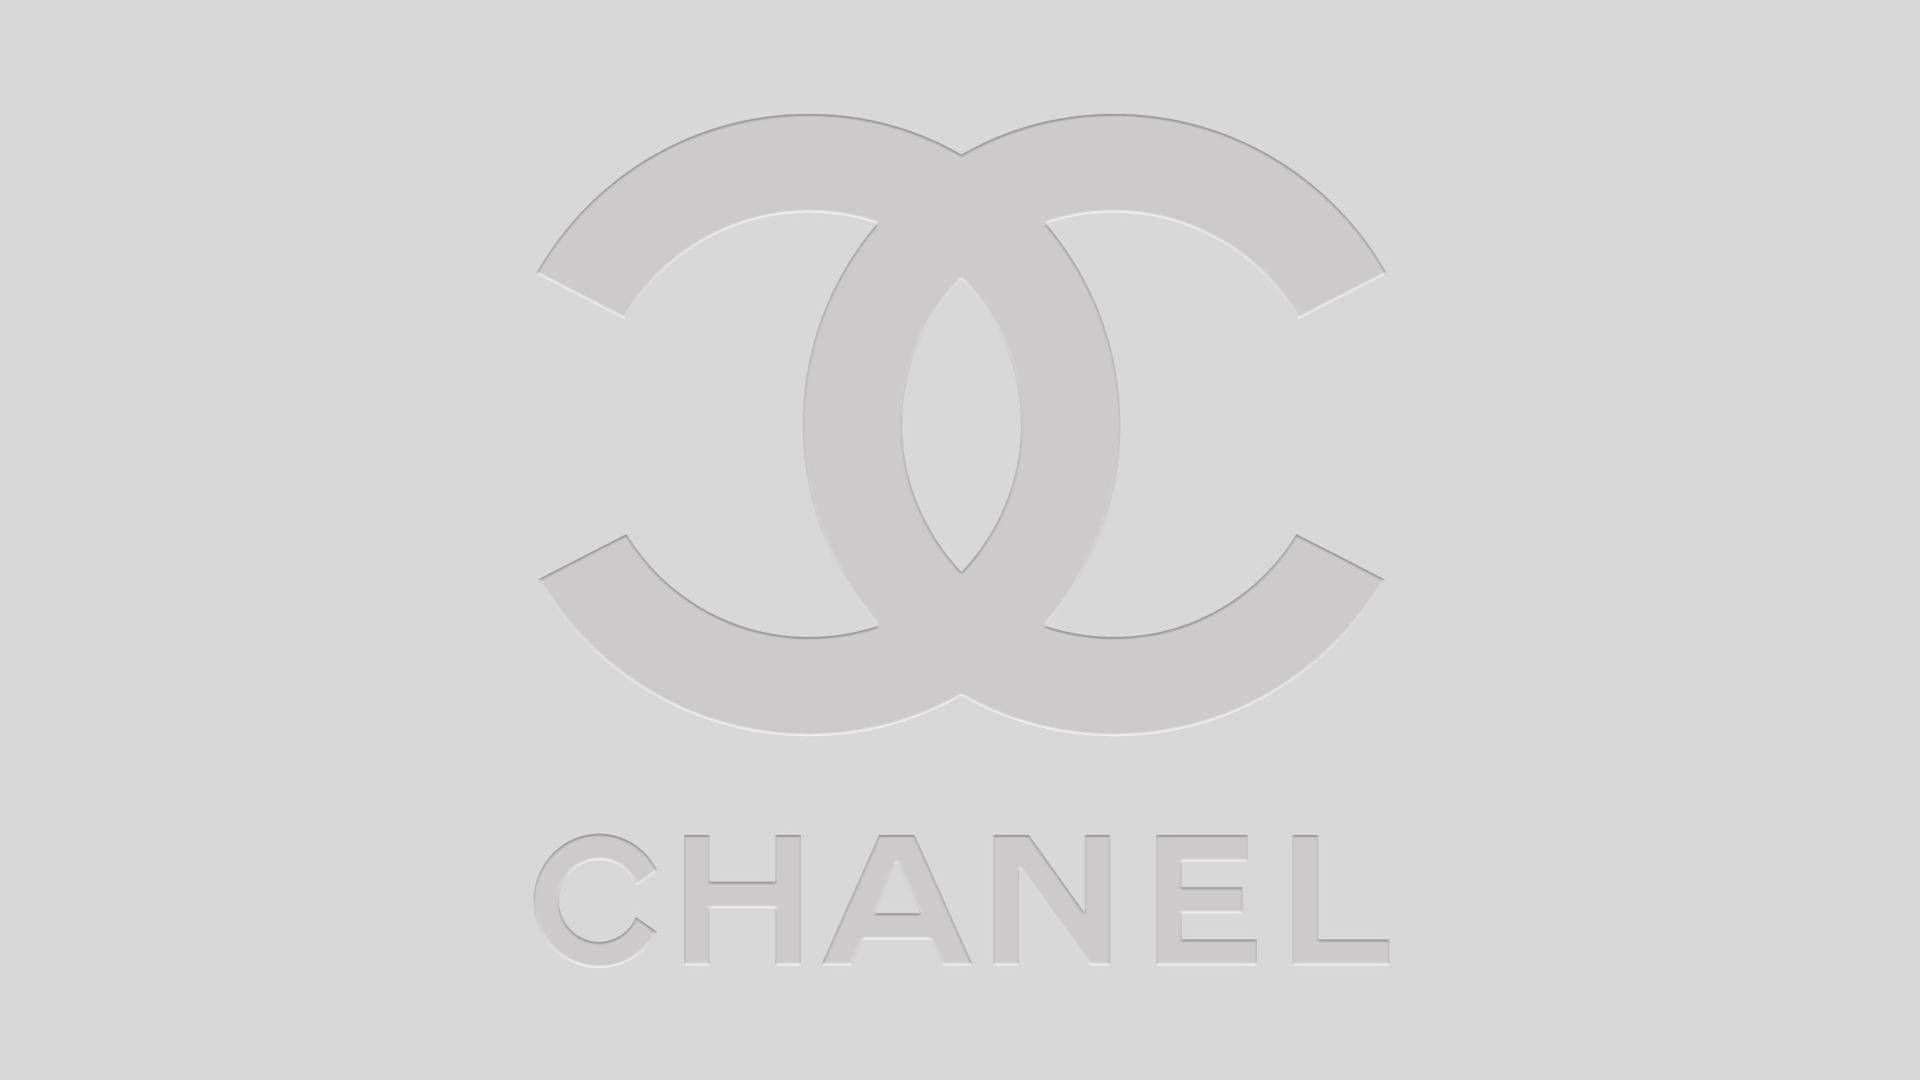 Free Chanel Logo Wallpaper Downloads, Chanel Logo Wallpaper for FREE